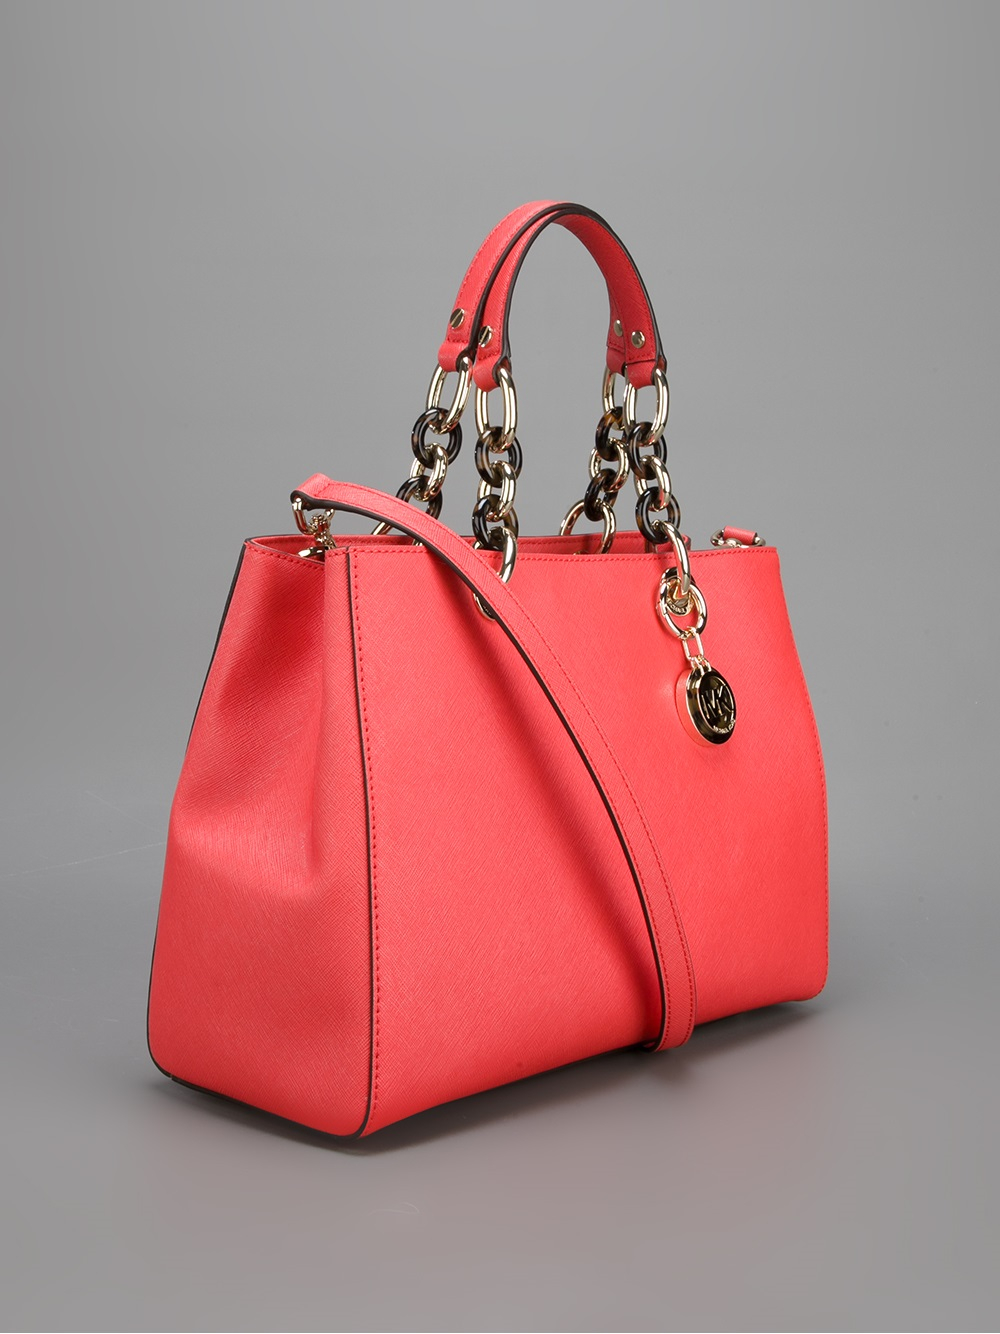 MICHAEL Michael Kors Cynthia Handbag in Red - Lyst